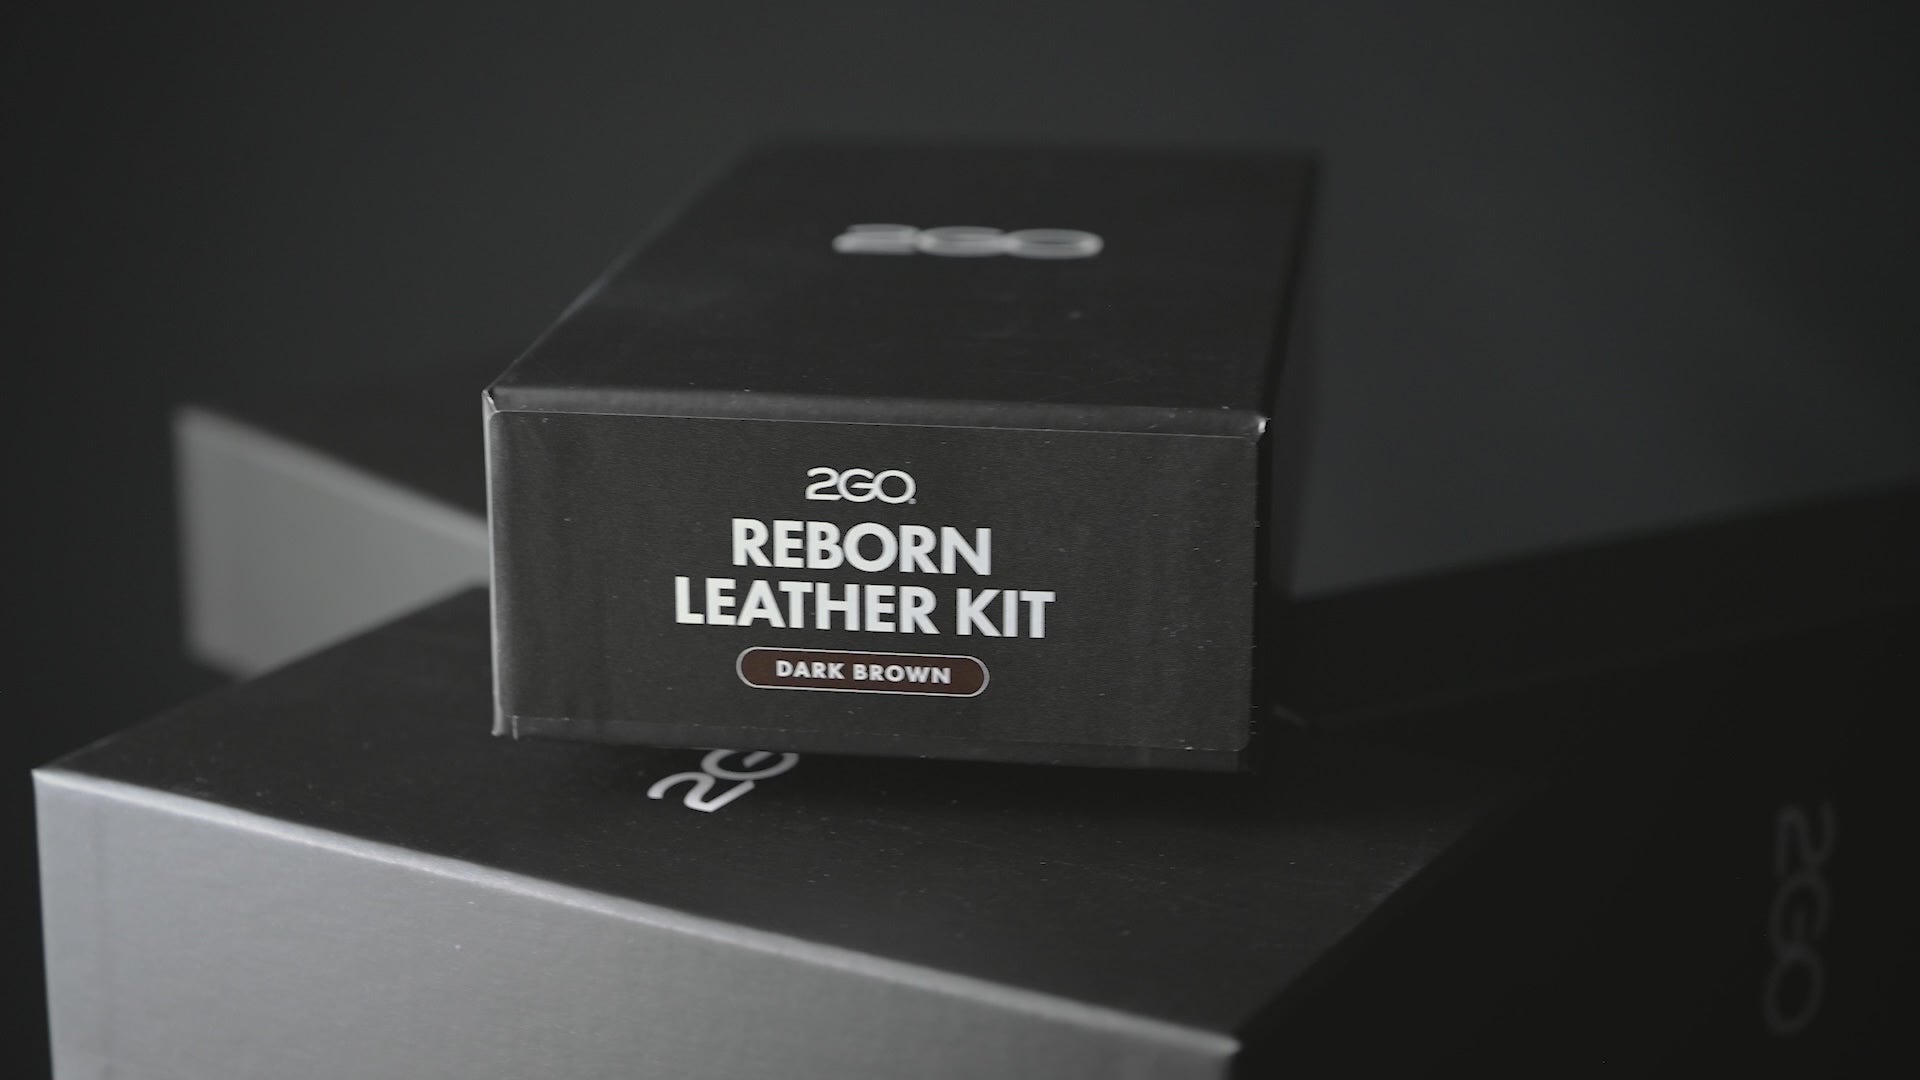 2GO Reborn Leather Kit